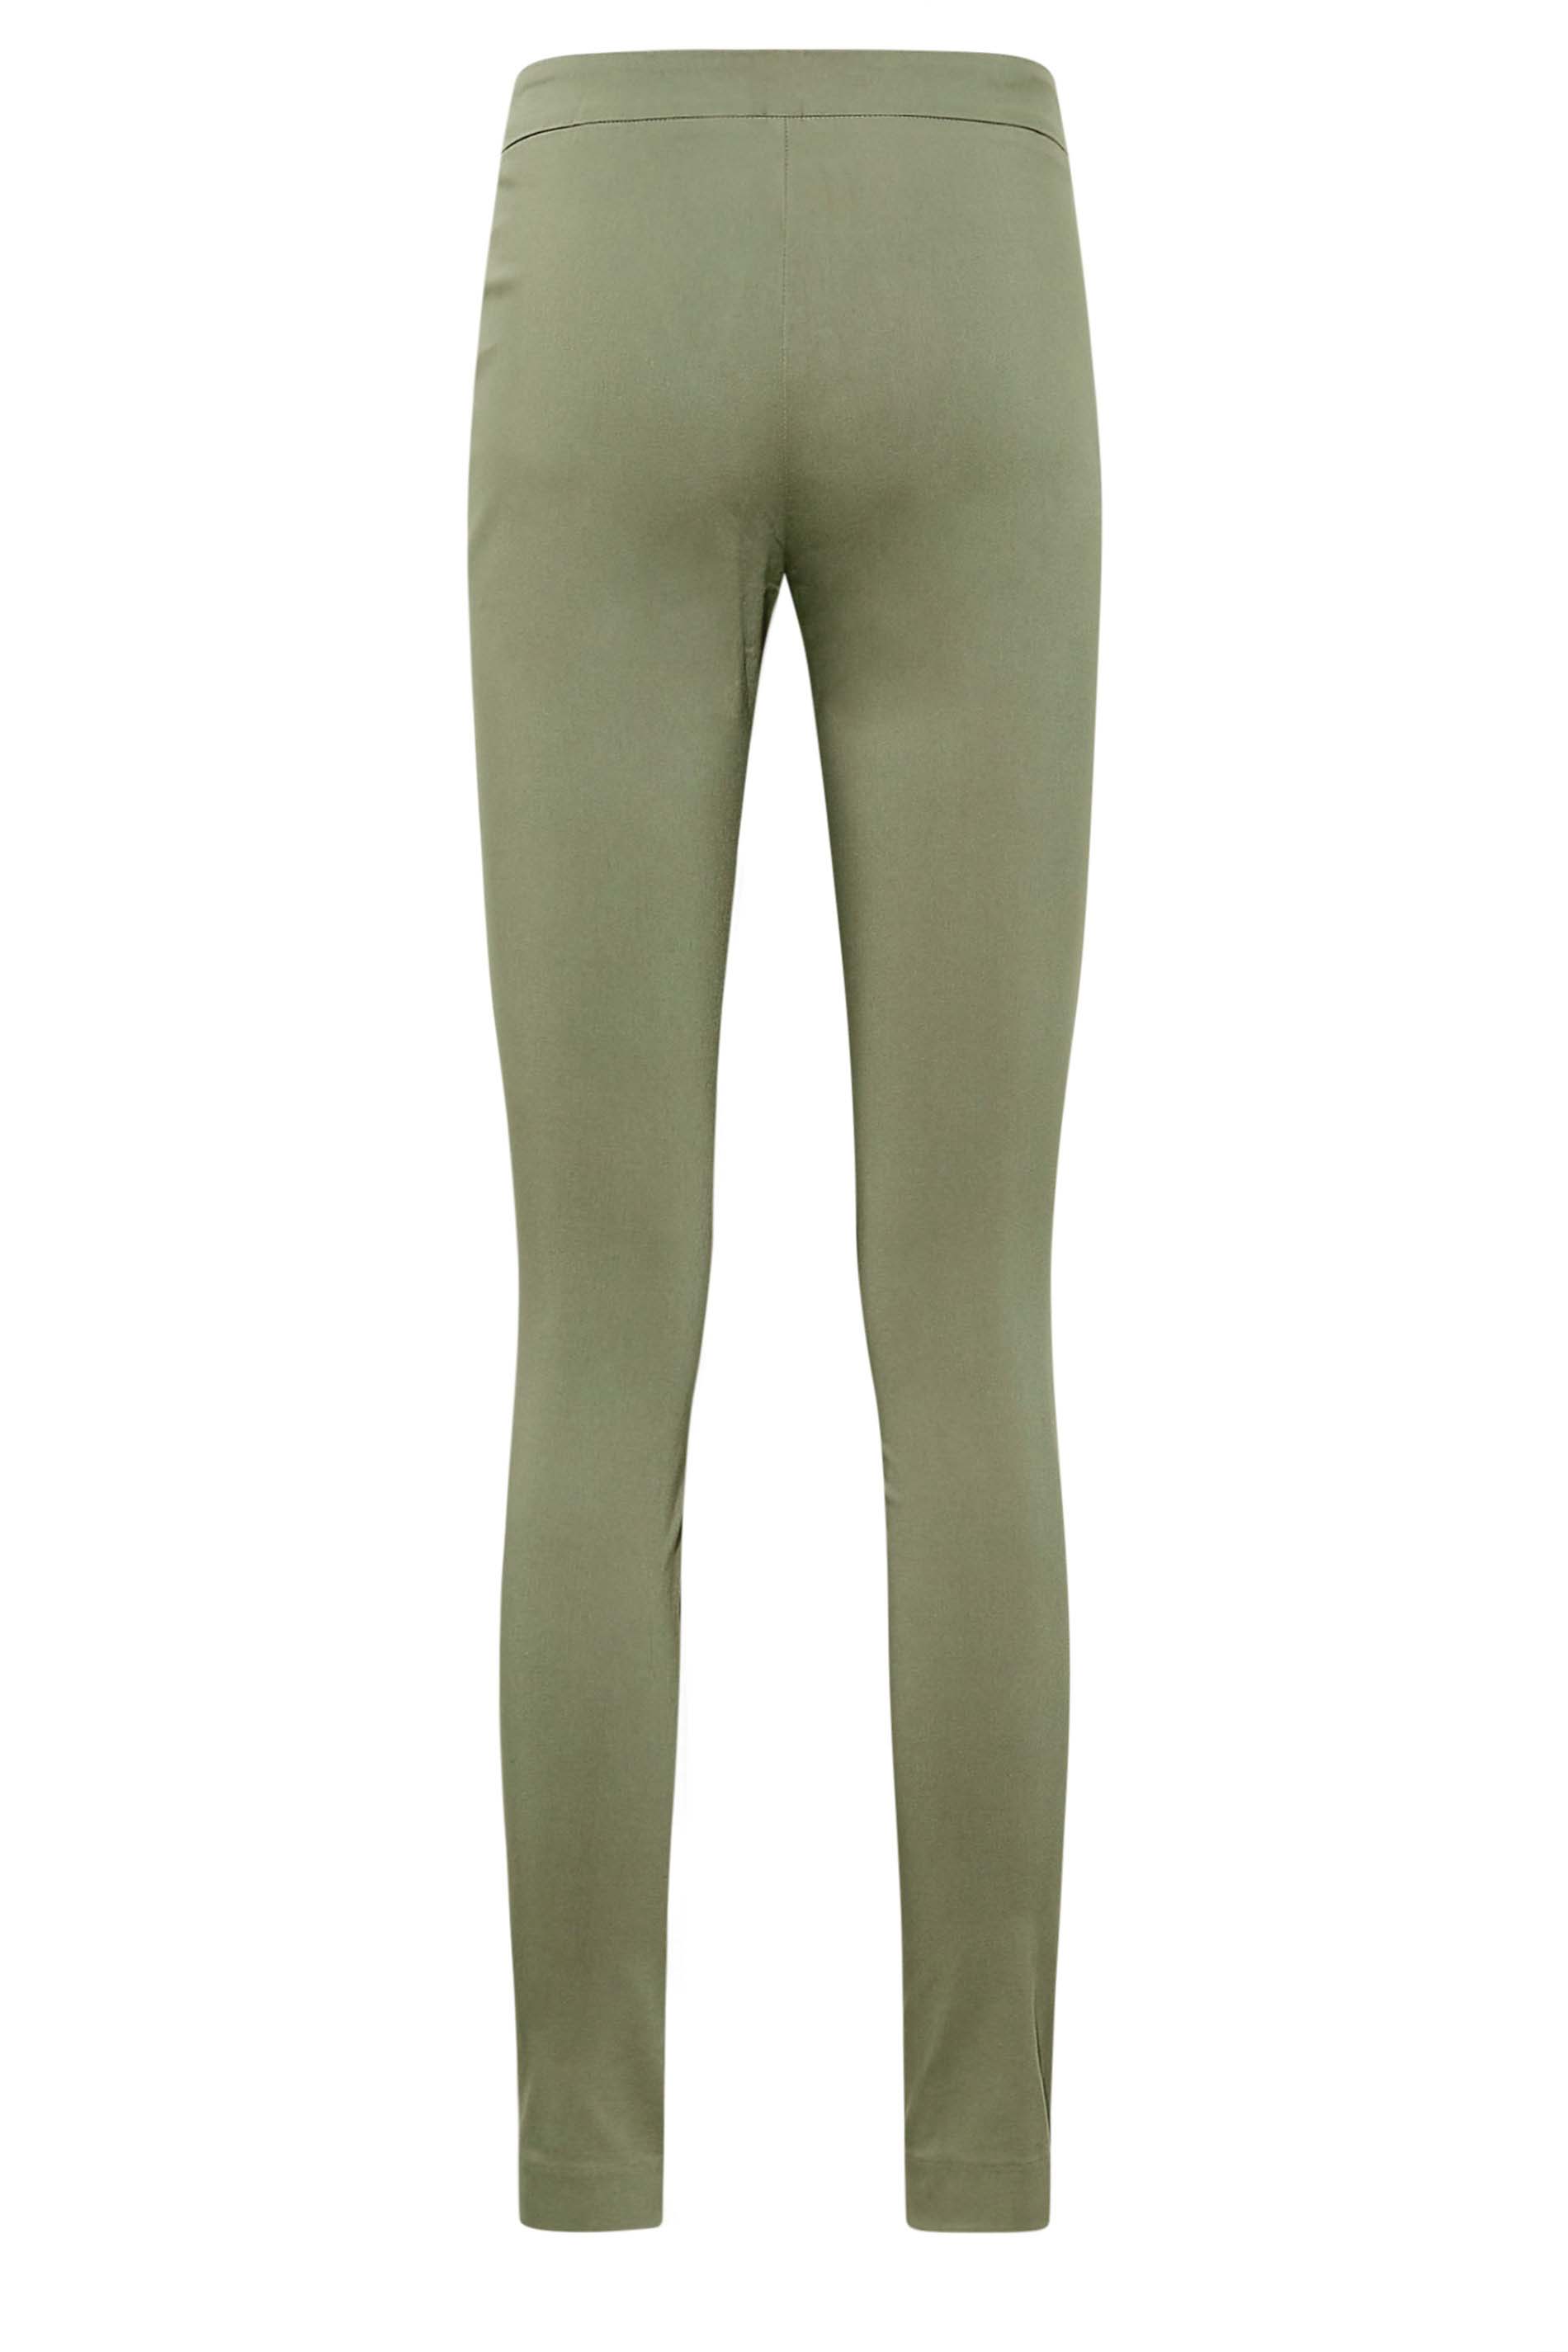 LTS Tall Women's Khaki Green Stretch Skinny Leg Trousers | Long Tall Sally 3